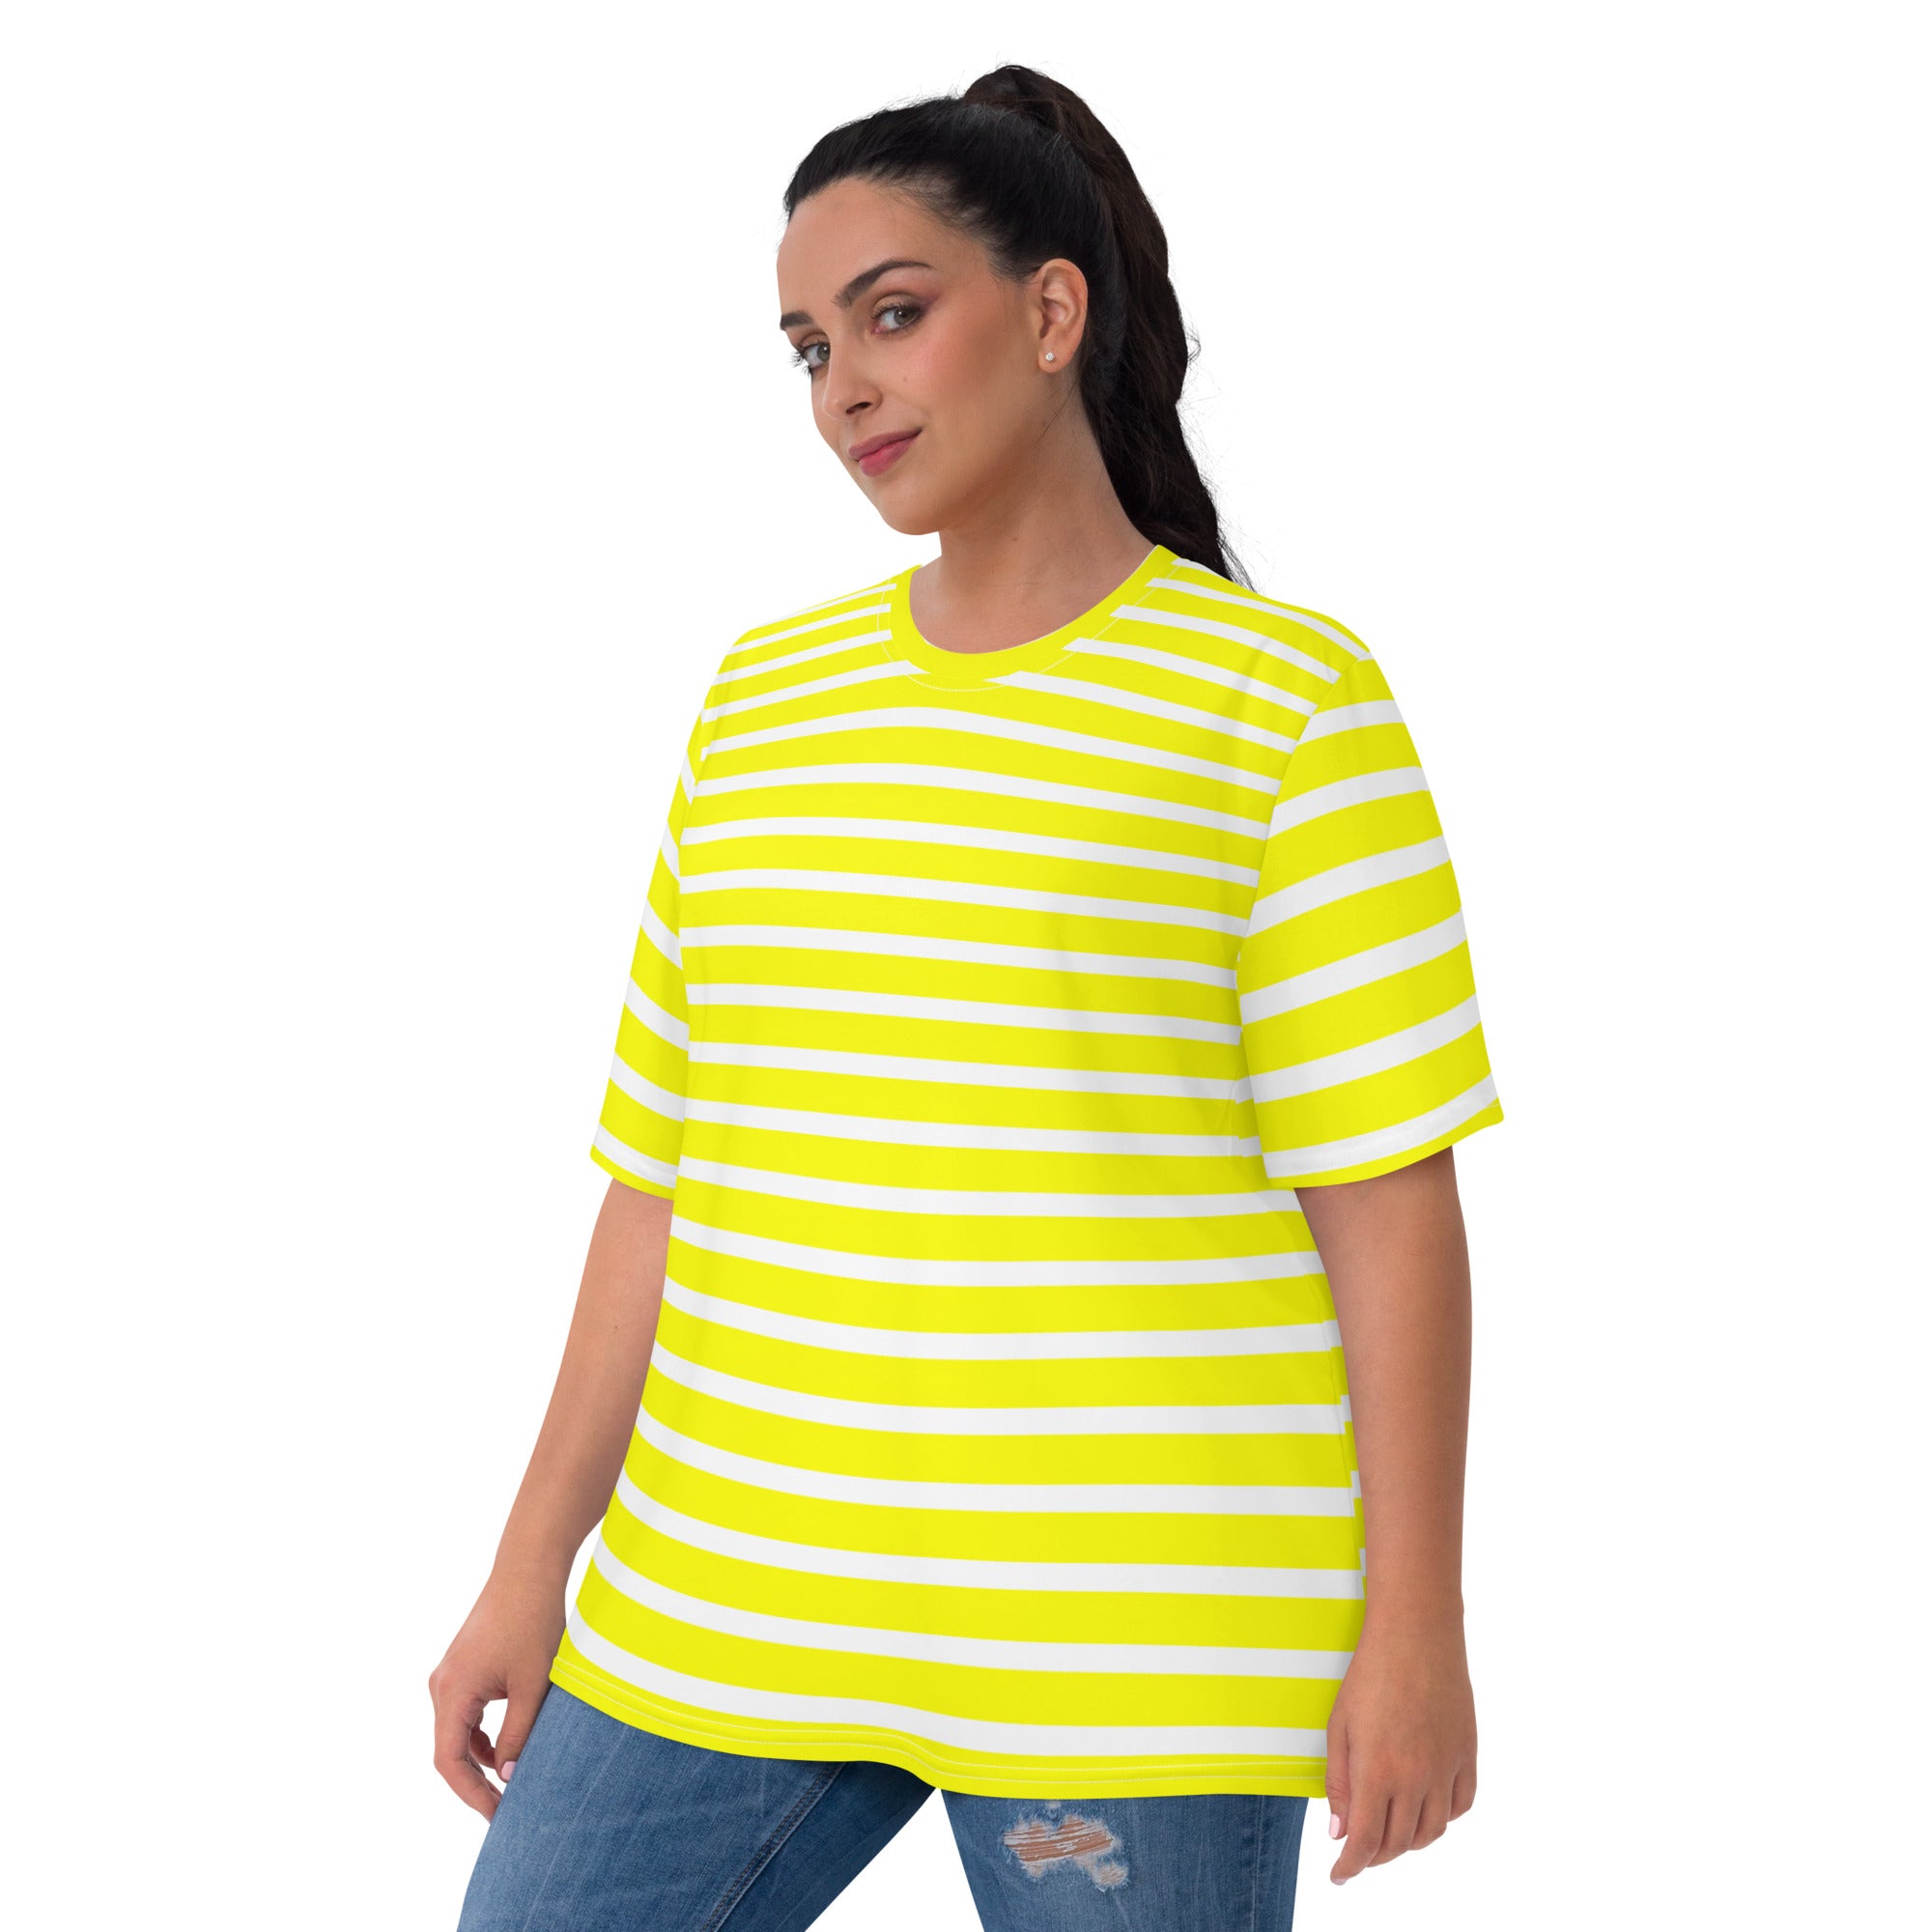 Women's T-shirt- White and Yellow Striped